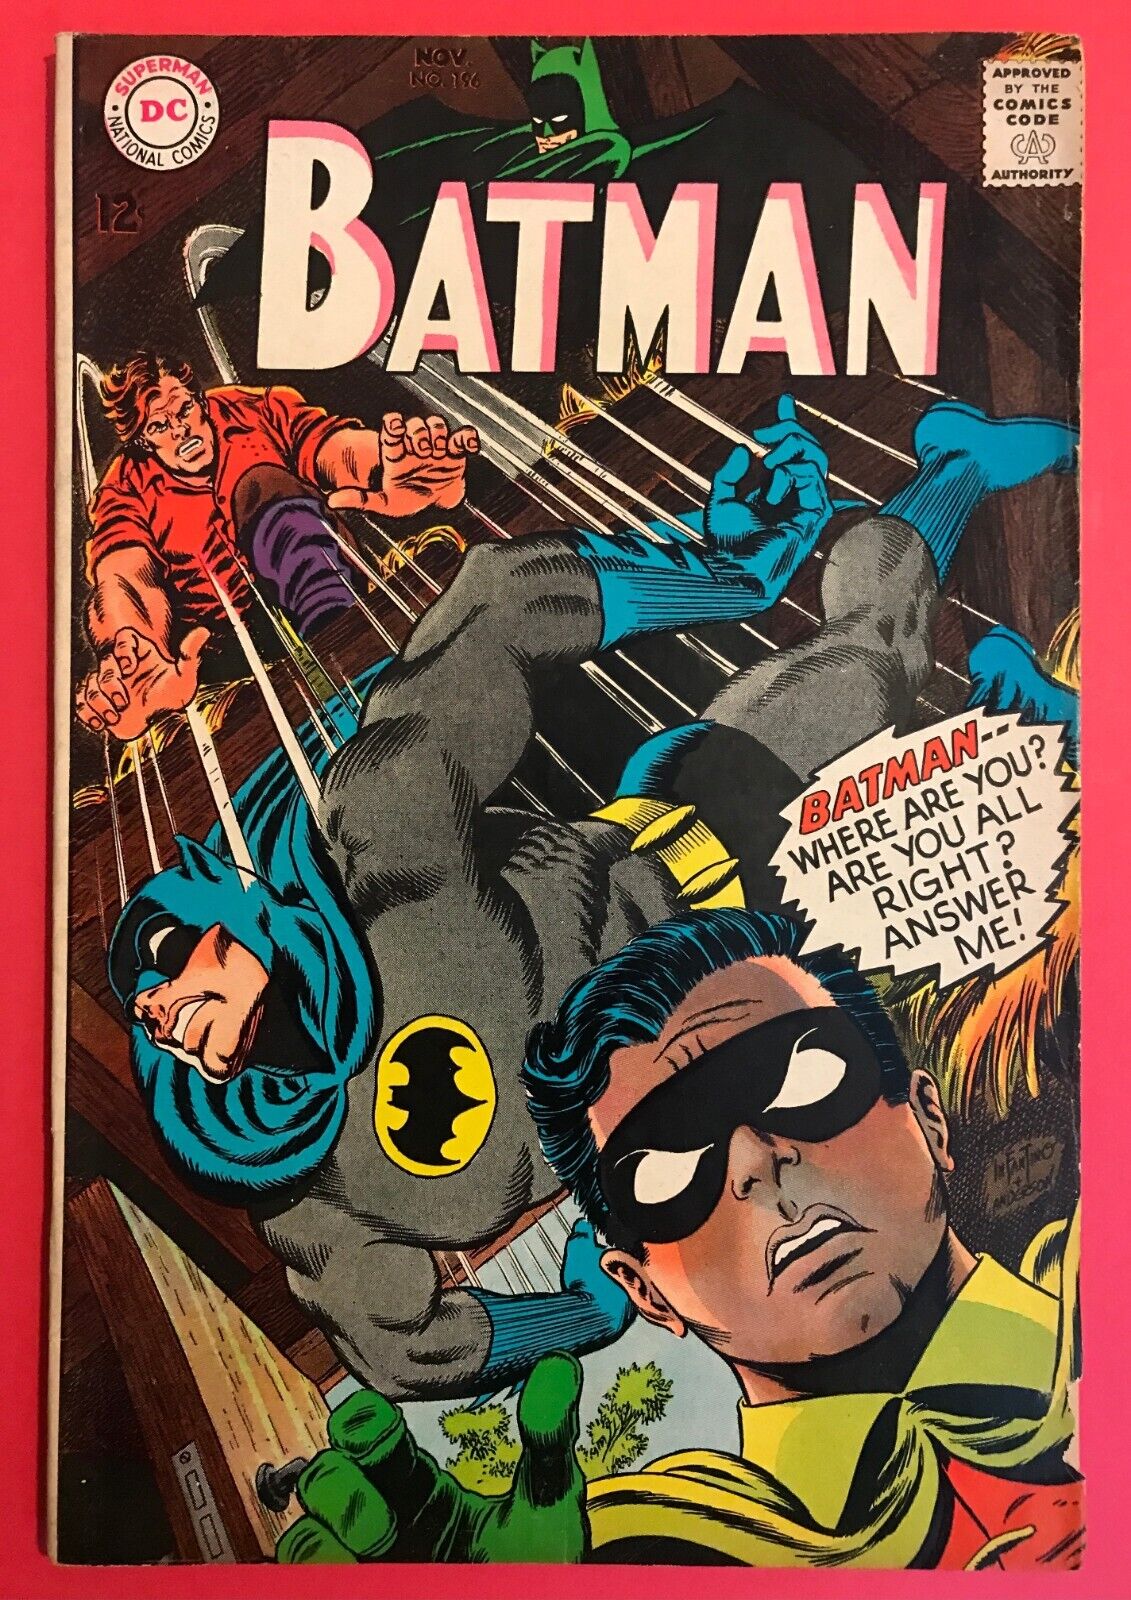 BATMAN - Issue 196 - DC Comics (September 1967) VG- (3.5)